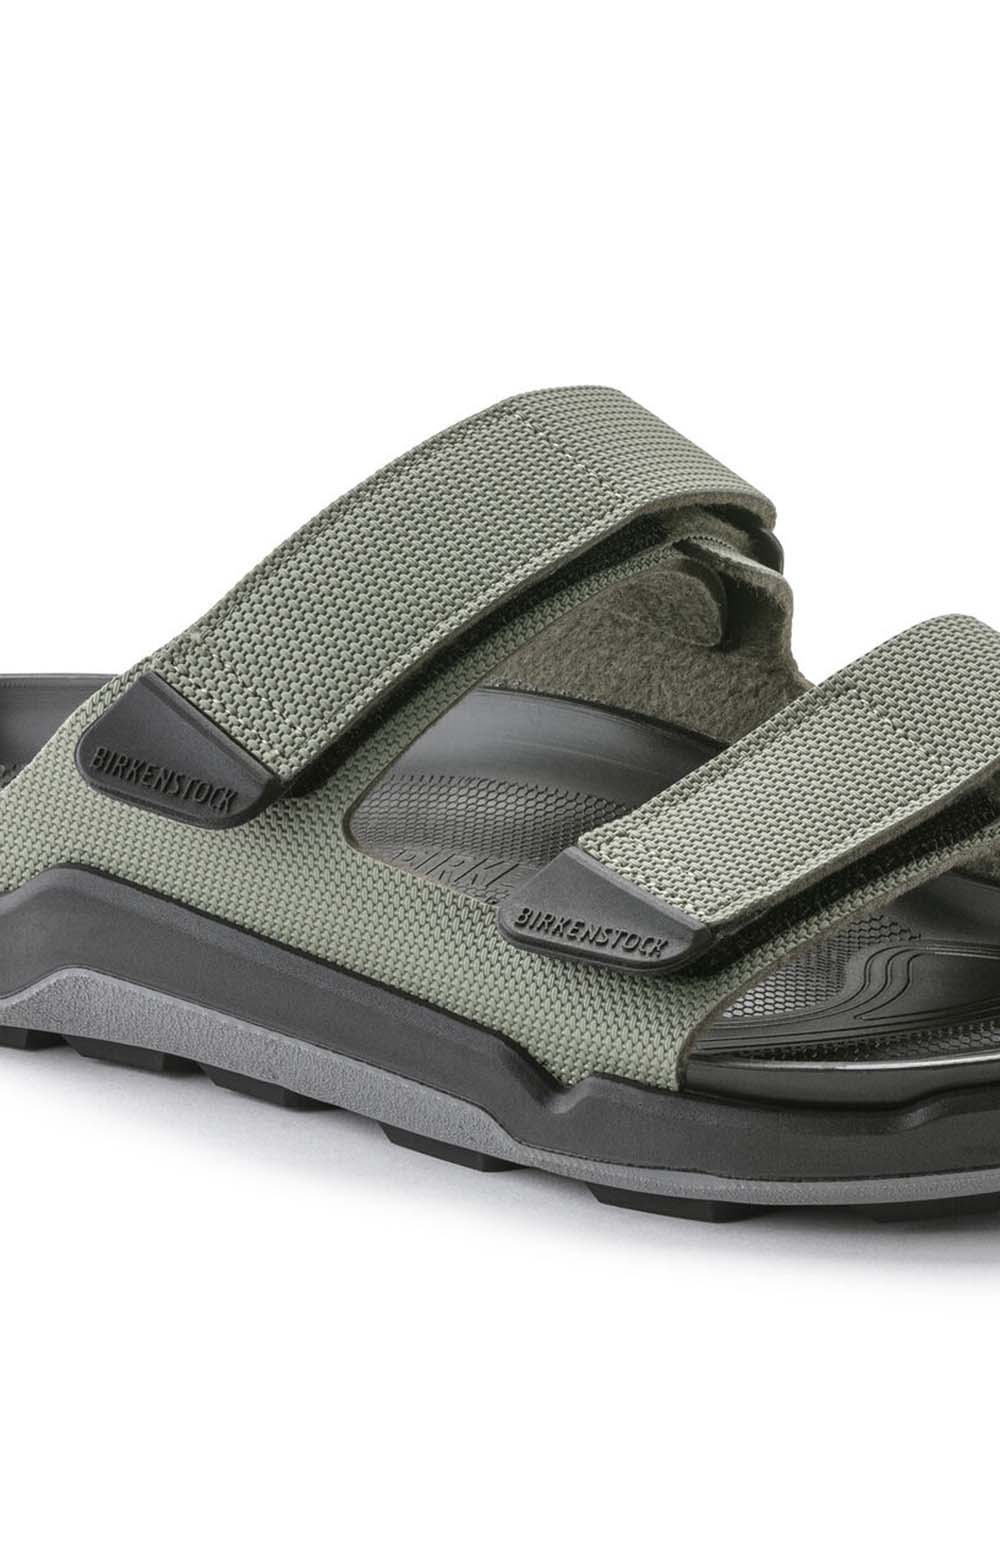 Close-up of the durable and stylish design of the (1022616) Atacama Sandals Futura Khaki